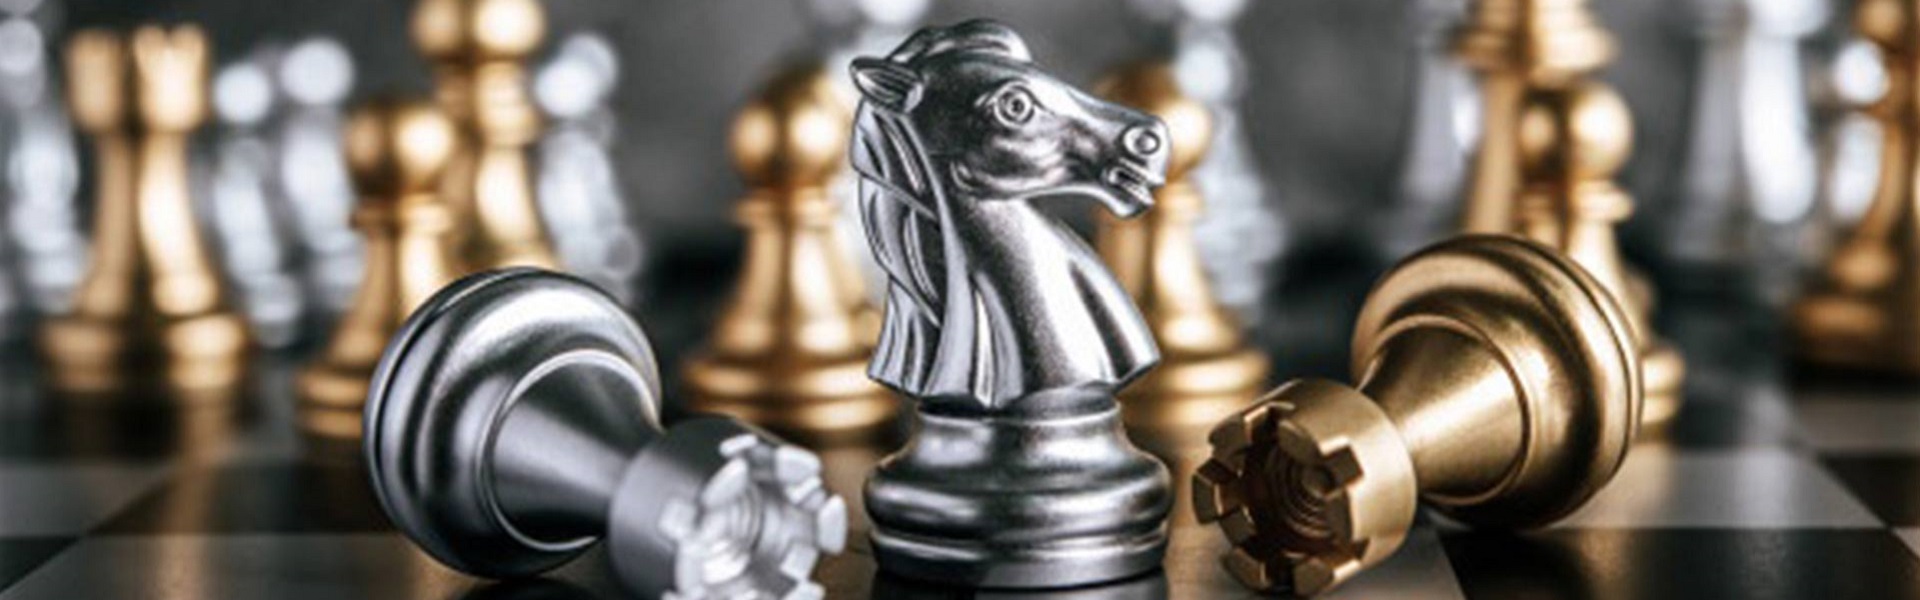 Sprej za grlo |  Chess lessons Dubai & New York